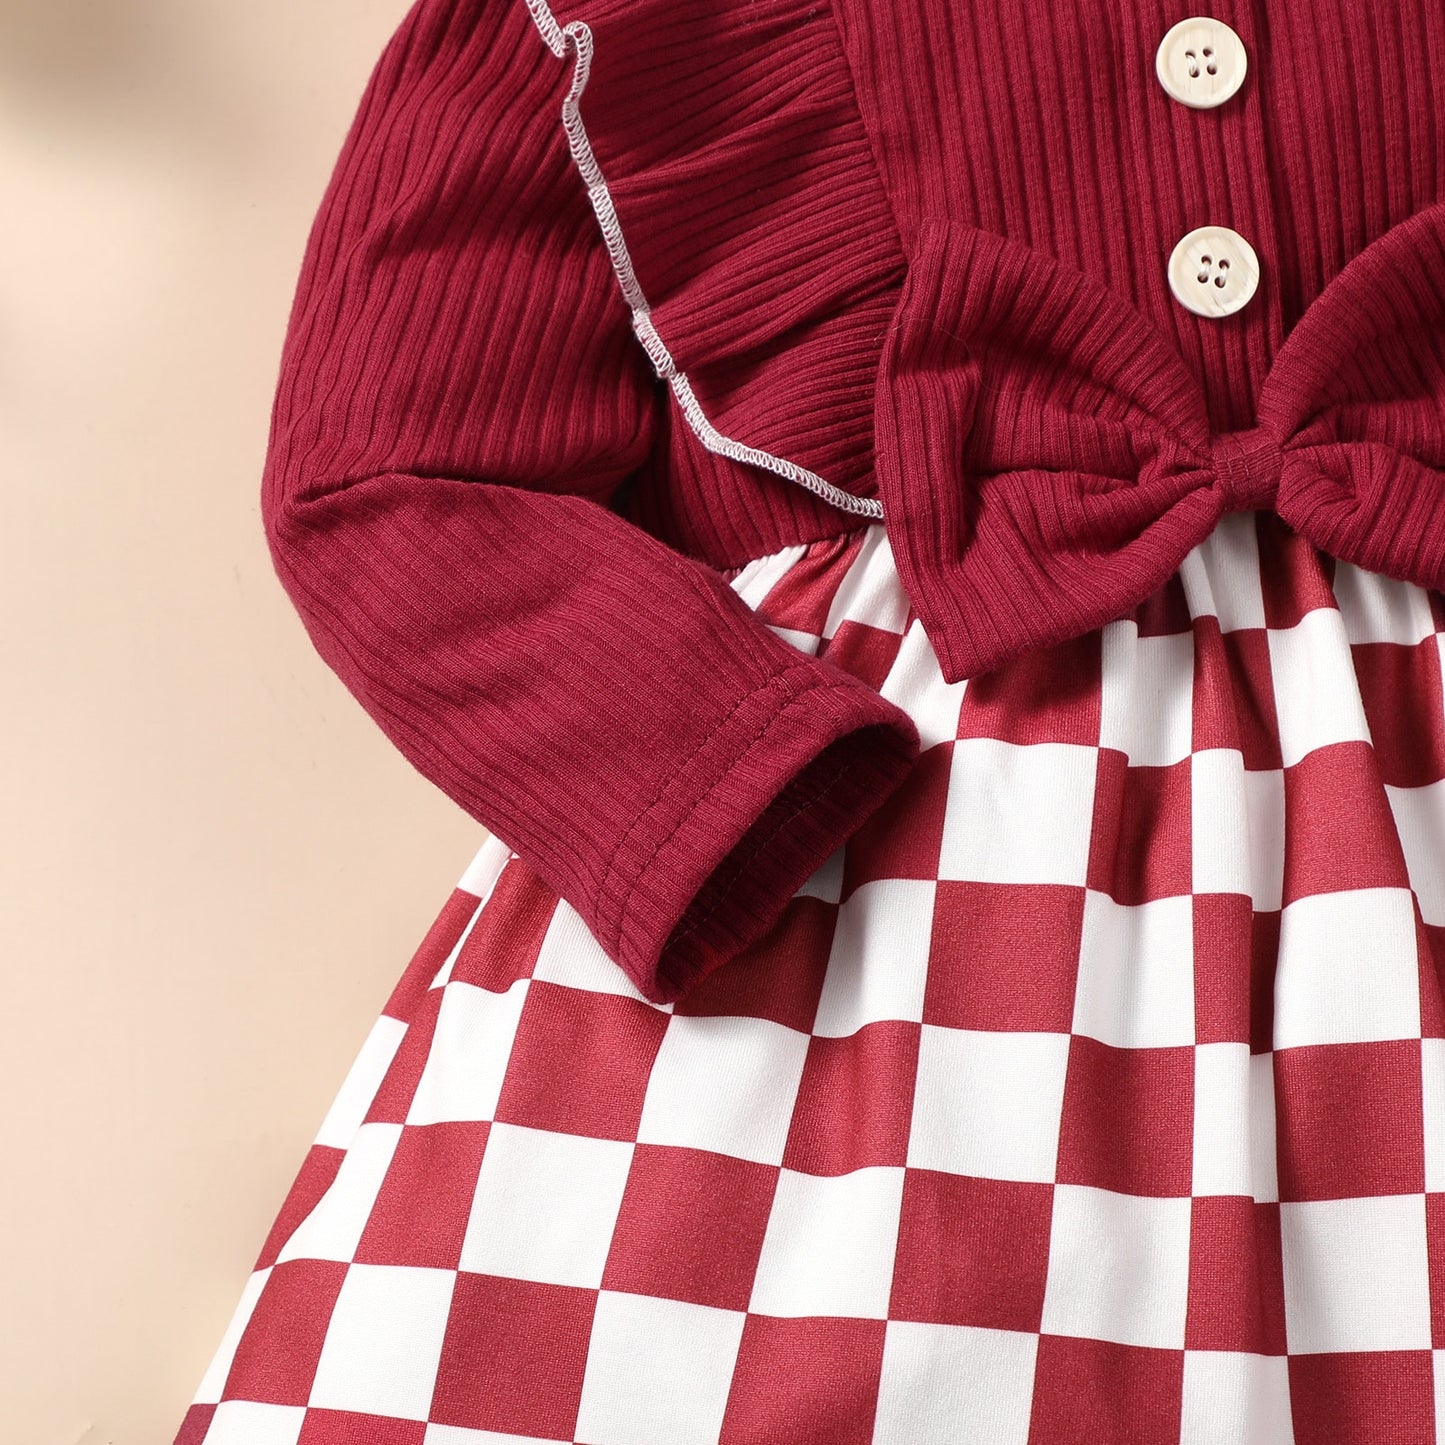 Baby Girl Romper Spring Autumn Fashion Heart-print Suspender Triangle Romper - BTGR8436